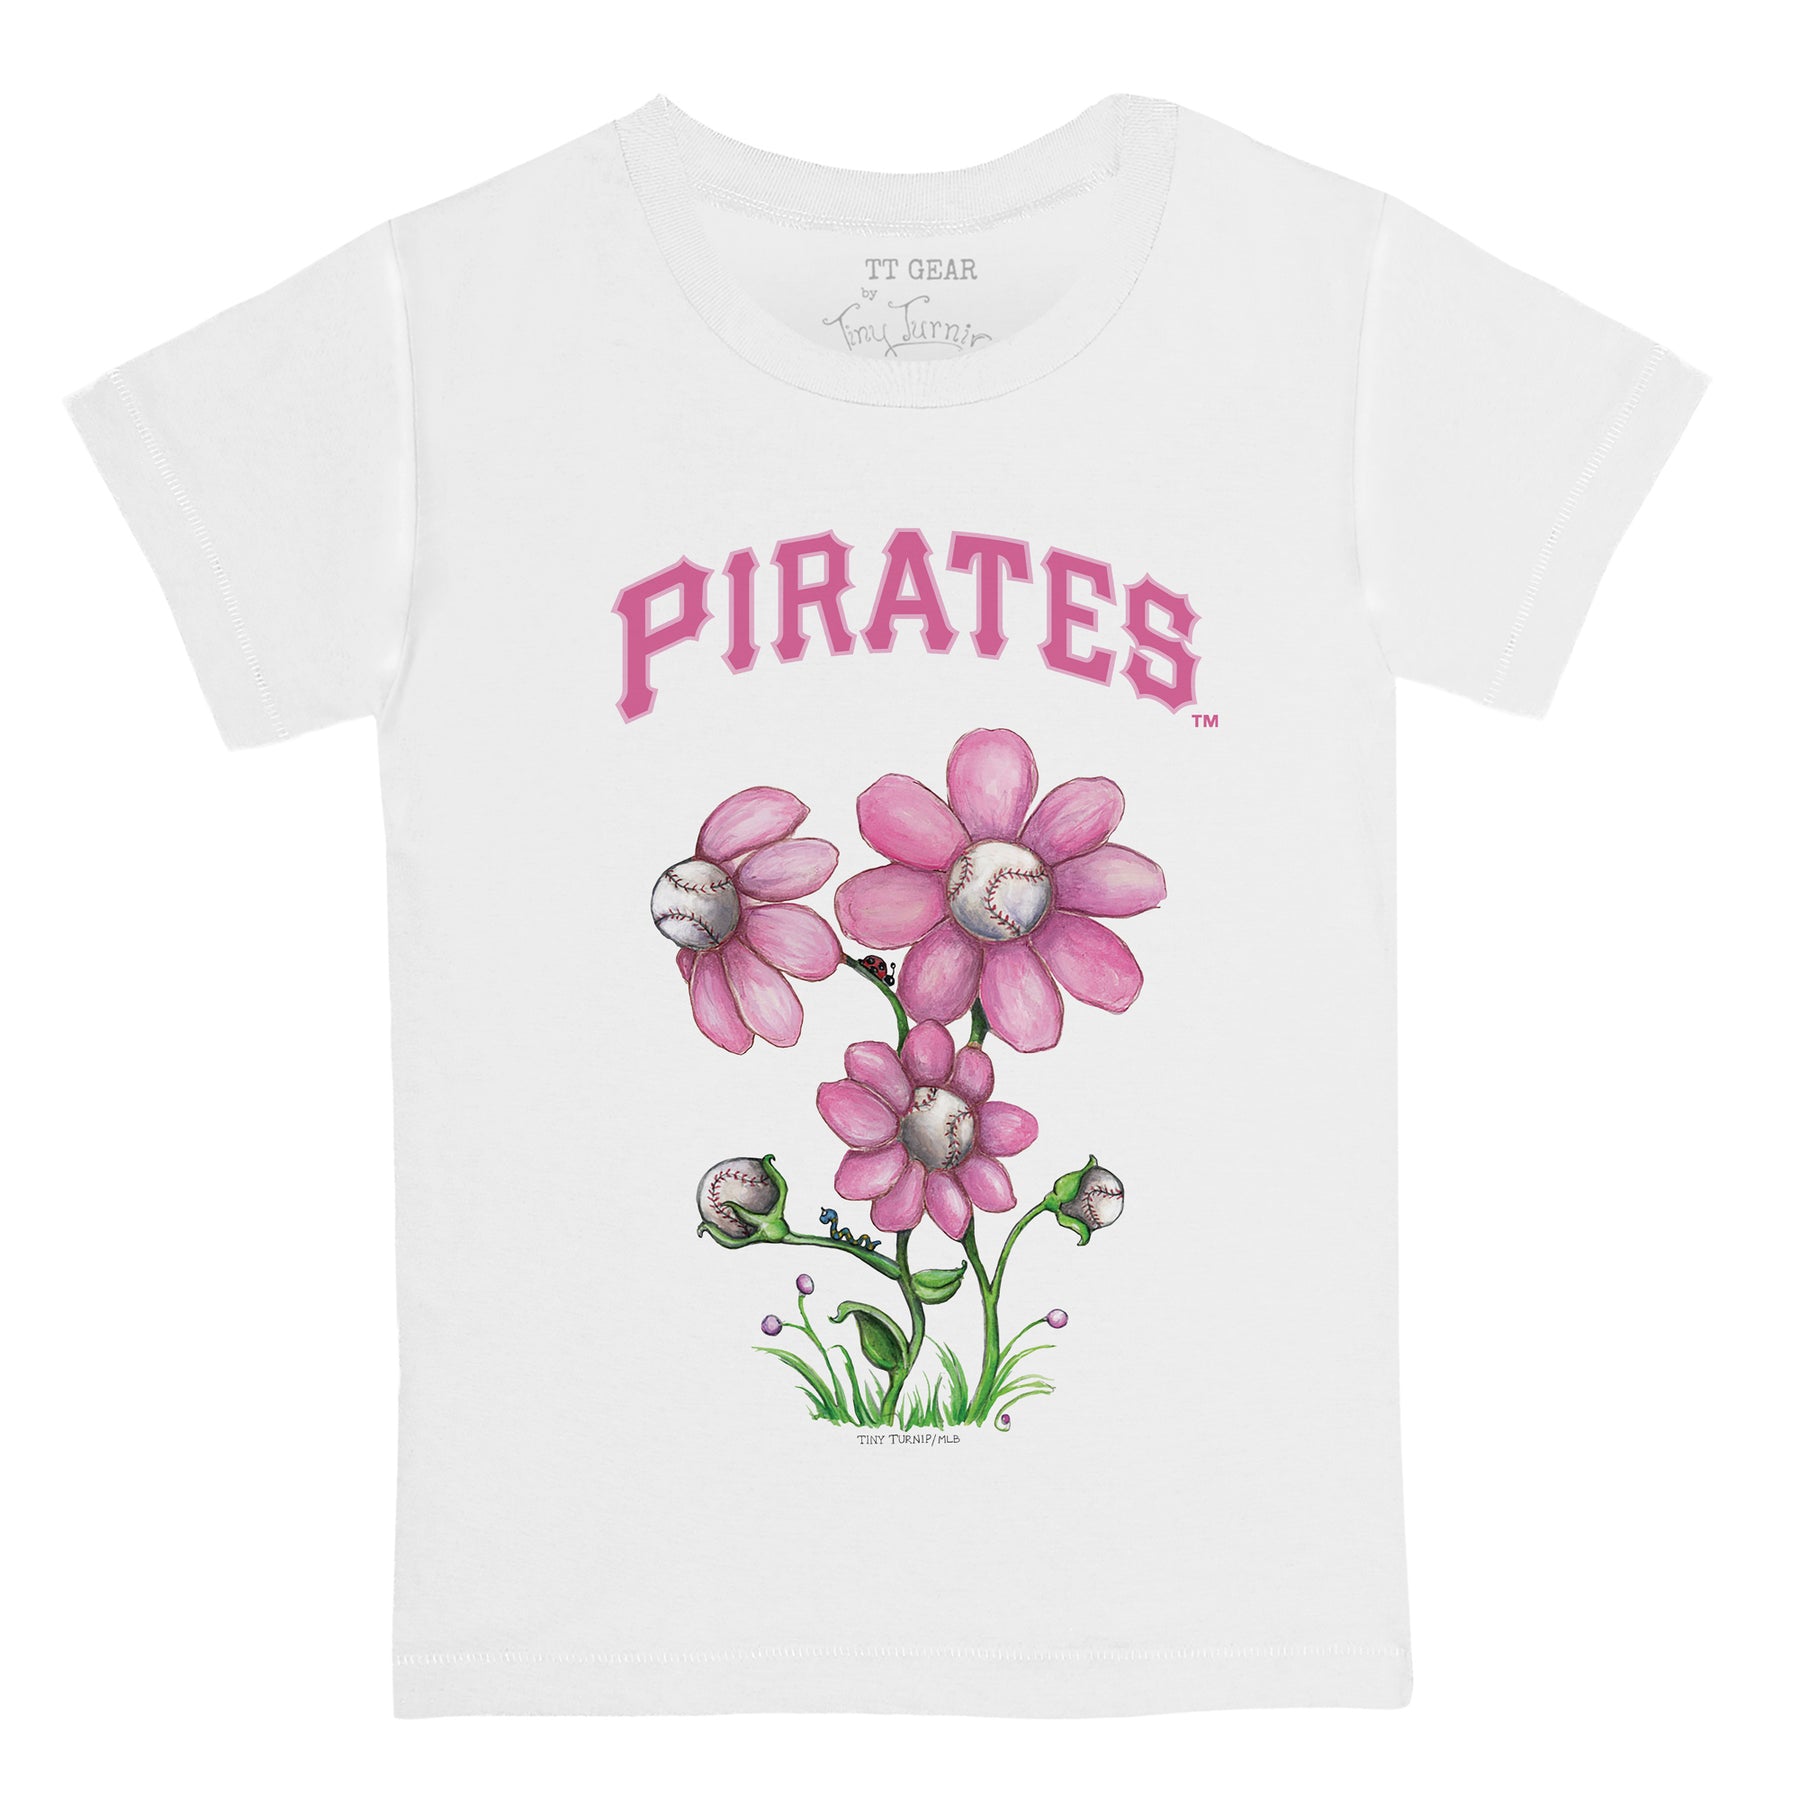 MLB Pittsburgh Pirates Boys' V-Neck T-Shirt - S